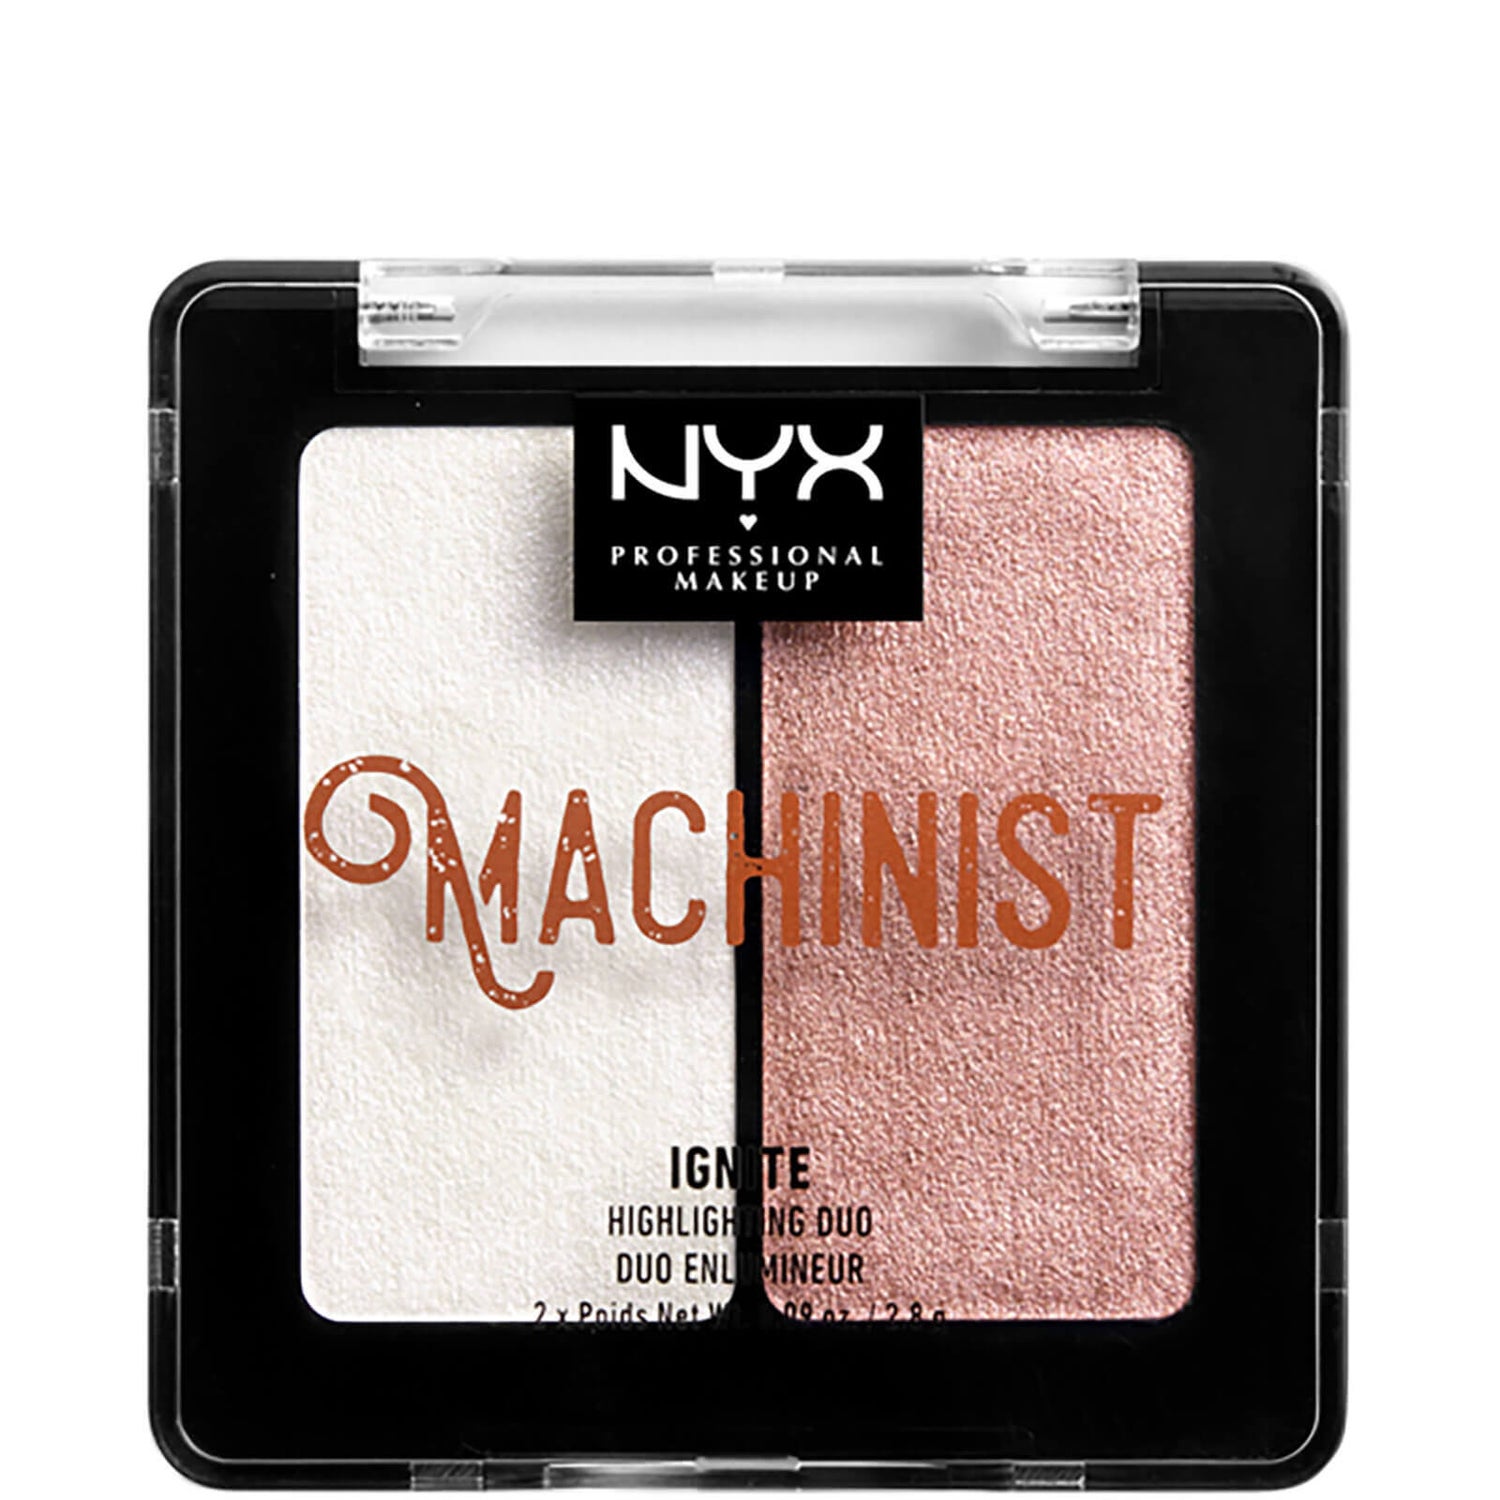 NYX Professional Makeup Machinist Highlighter Duo Kit -korostusväriduo, Ignite